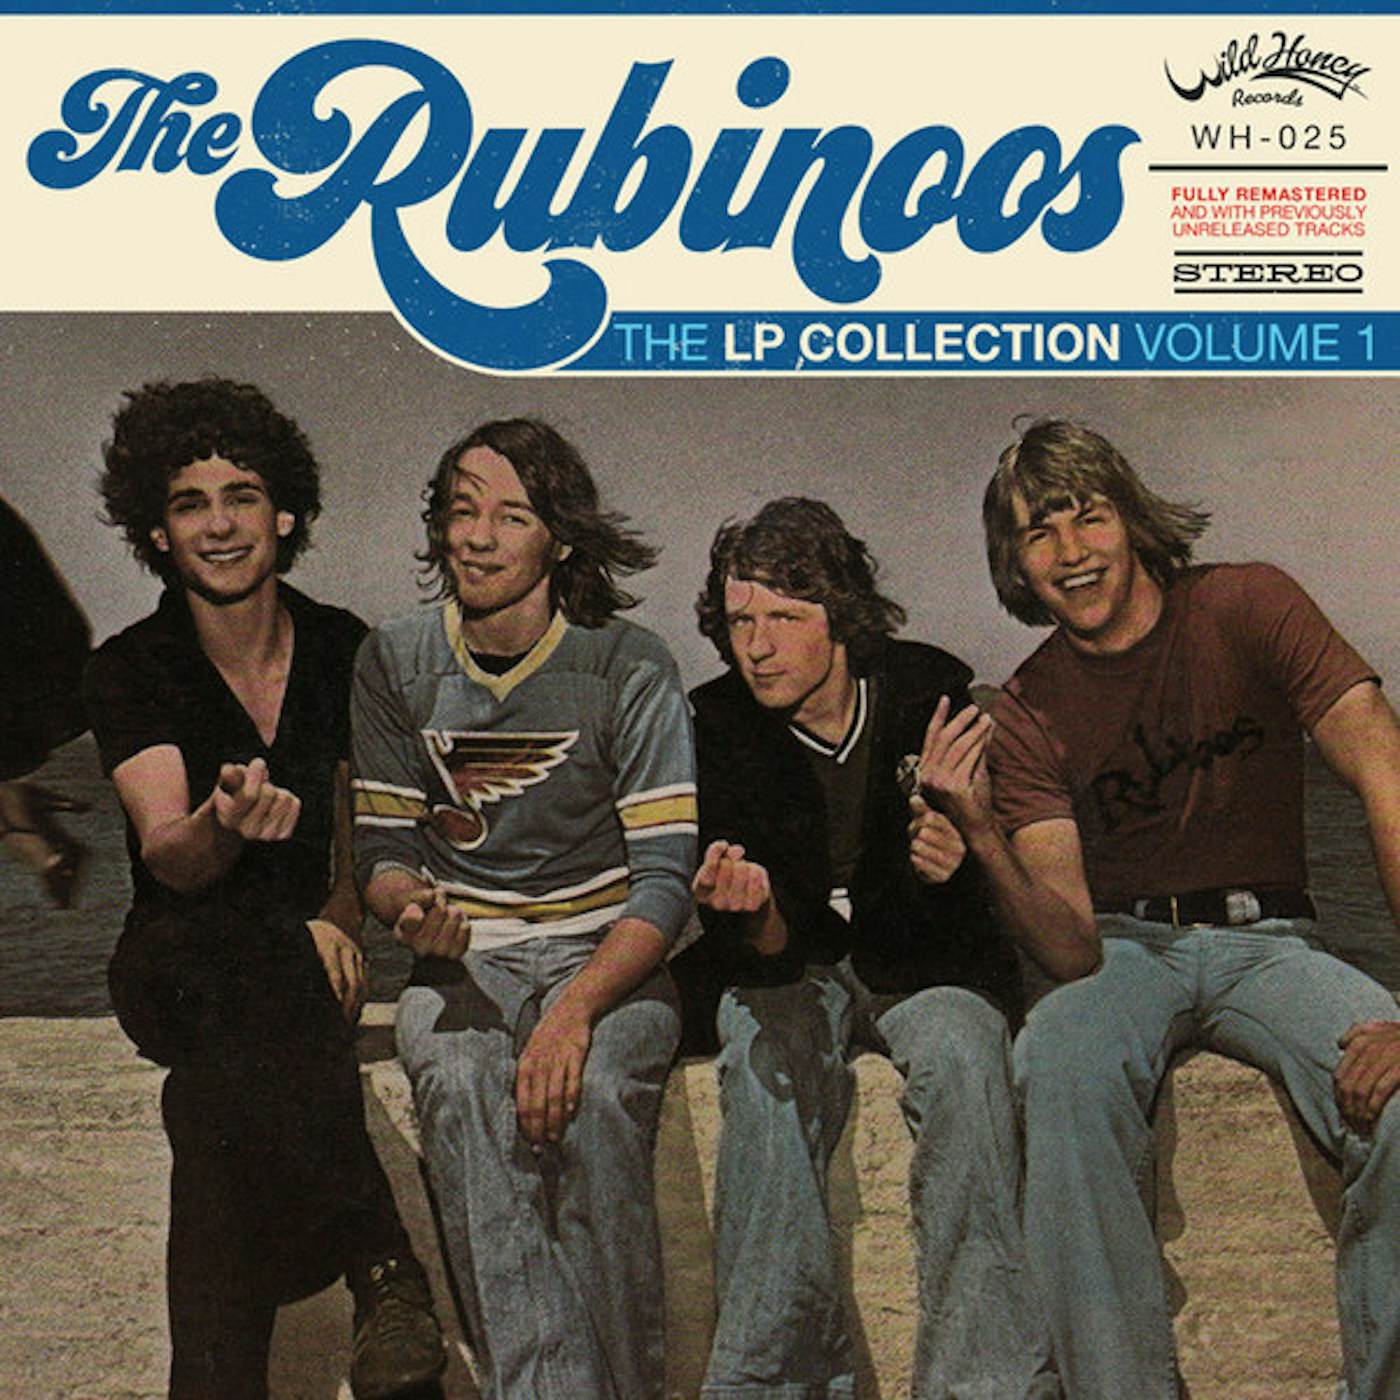 The Rubinoos LP Collection Vol. 2 Vinyl Record